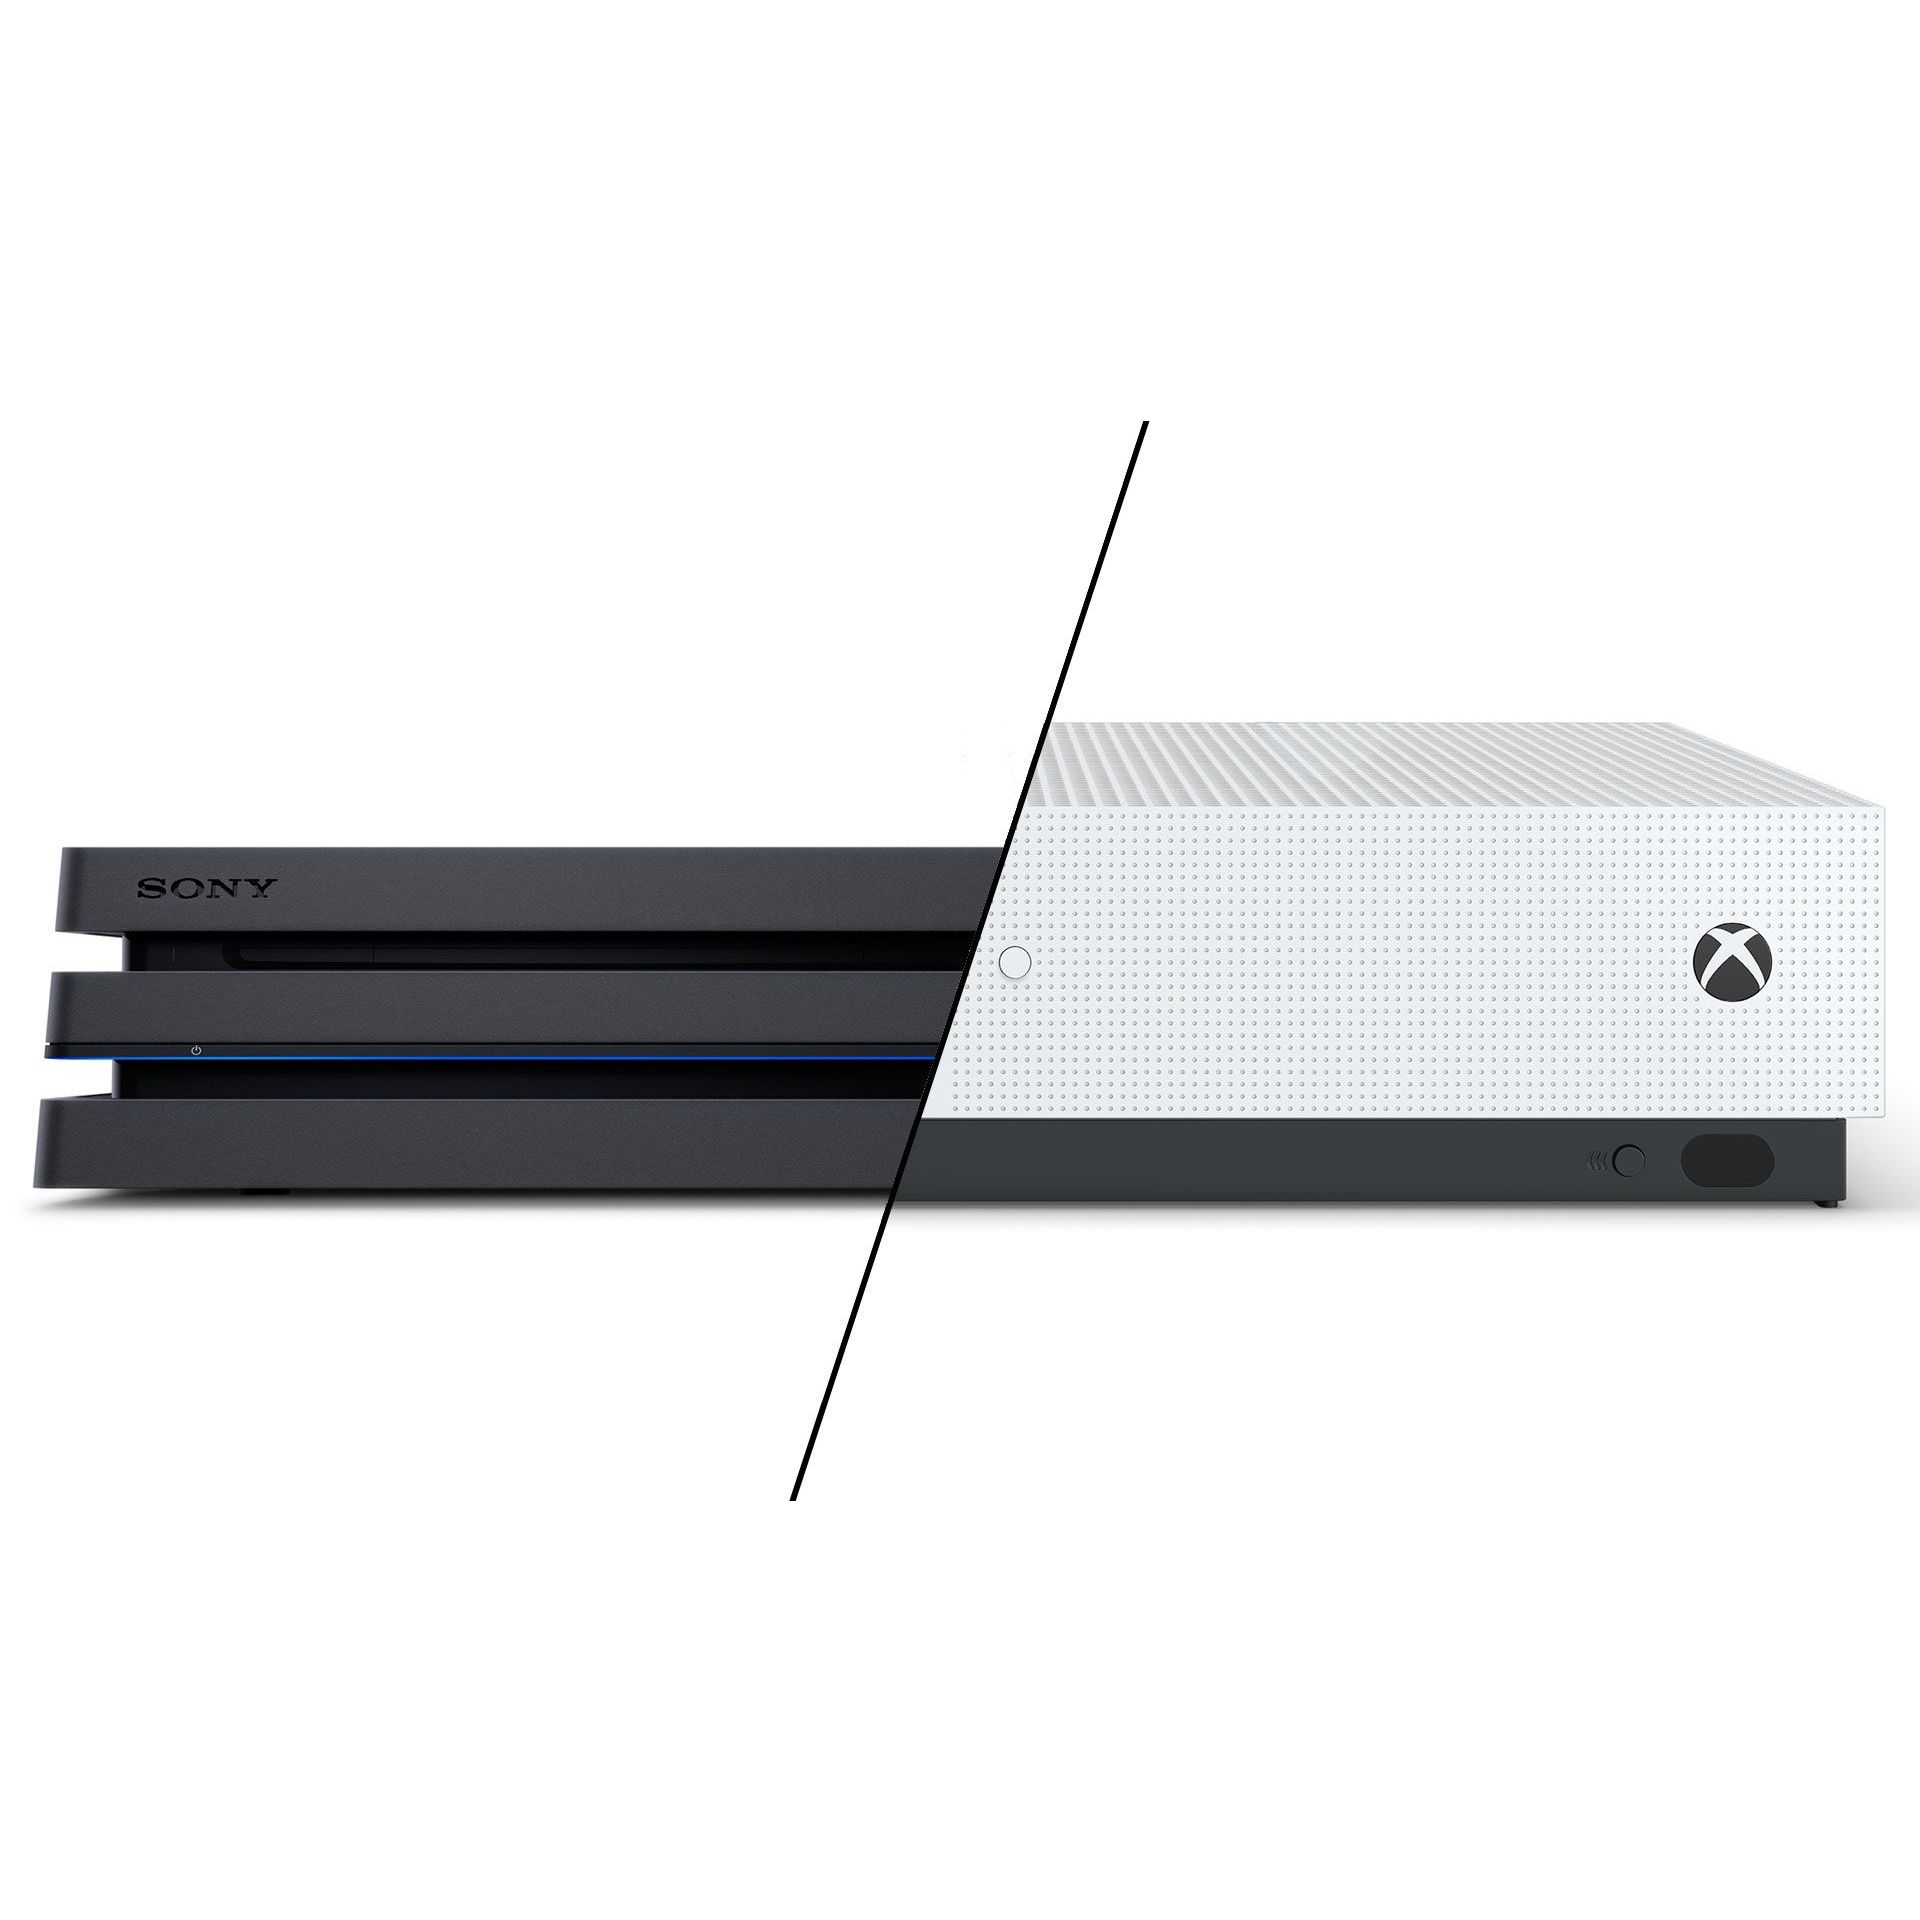 Accor Manifesteren Aanhankelijk PS4 Pro vs Xbox One X – Which console should you buy?